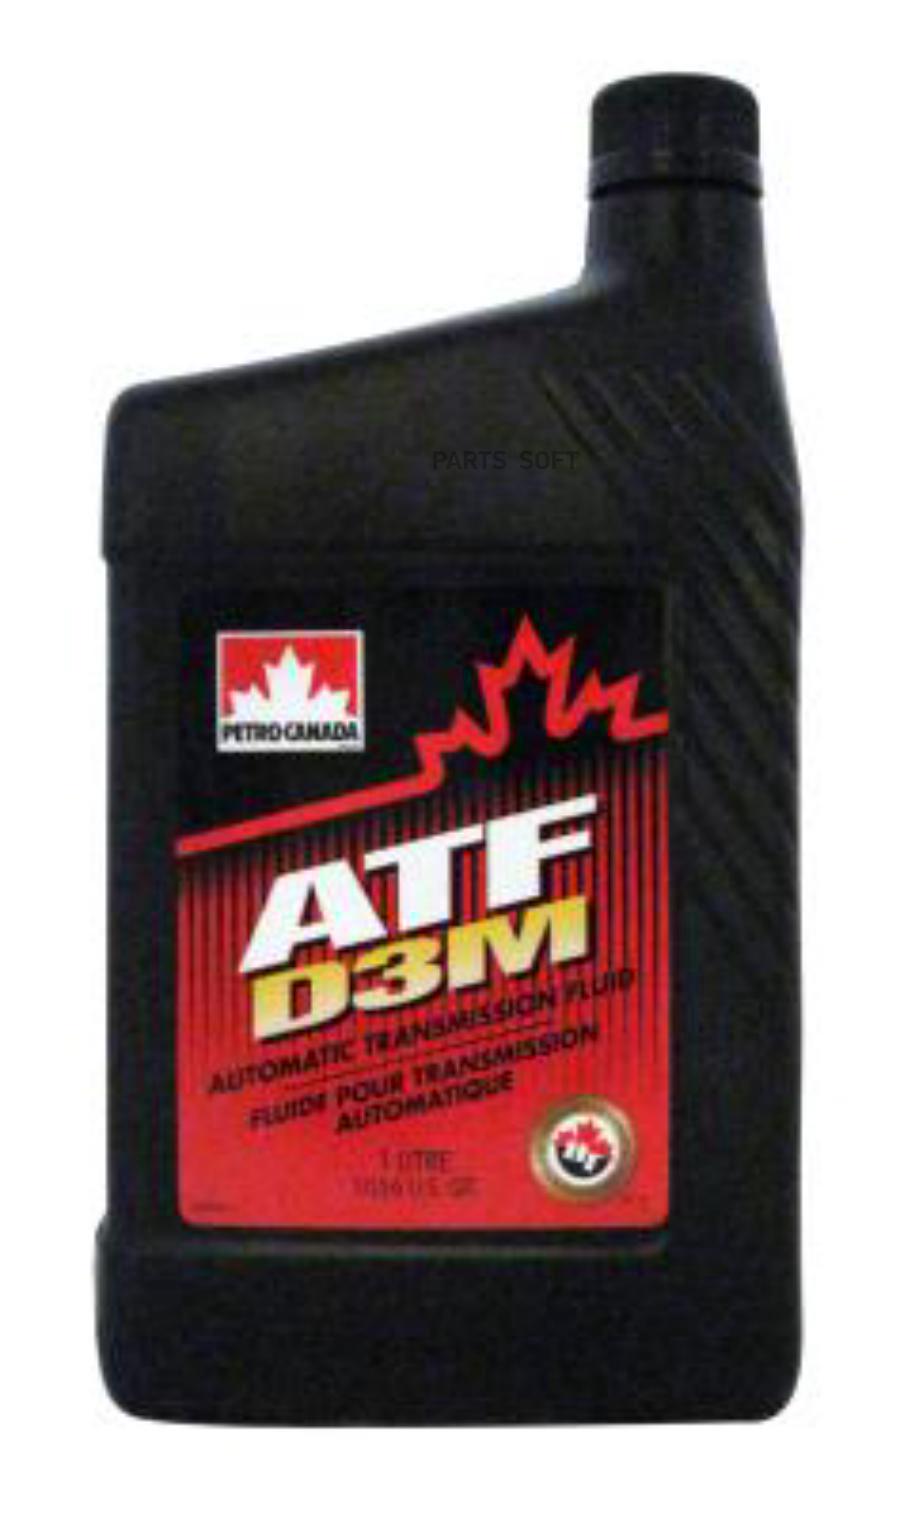 Petro canada atf. Petro-Canada ATF d3m. Petro-Canada ATF D-III (d3m). Petro Canada ATF 4+ артикул. Масло гидравлика Petro Canada ATF d3m.